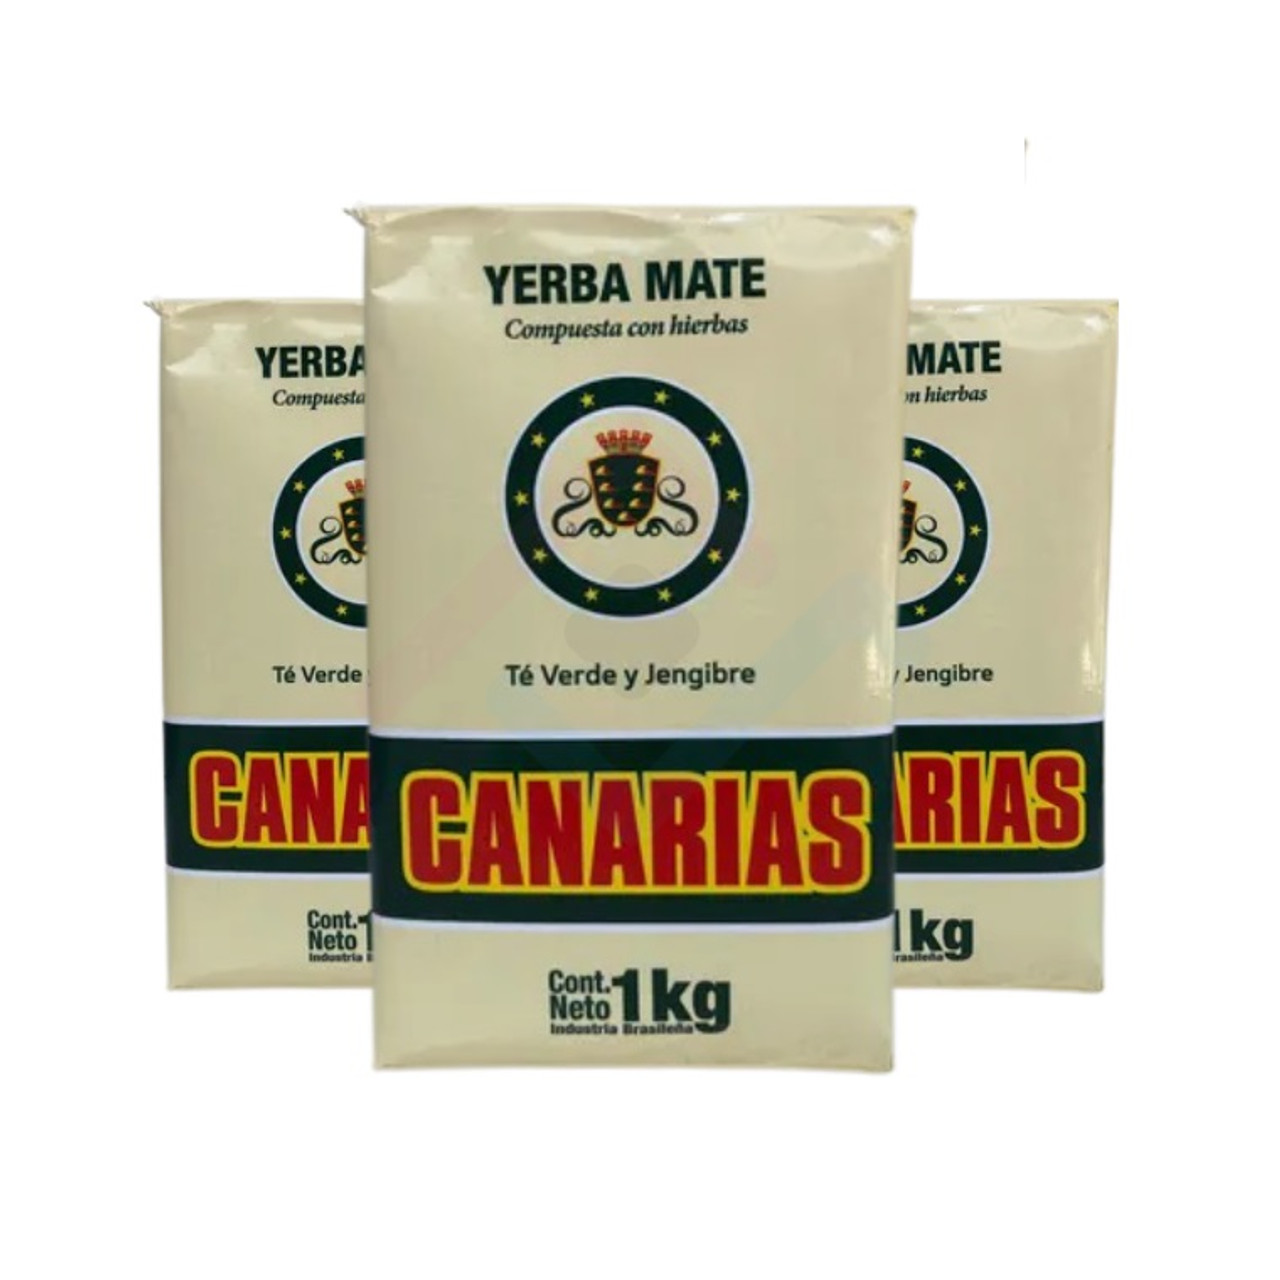 Canarias Yerba Mate Traditional Uruguay Yerba, 1 kg / 2.2 lb bag (pack of 3)